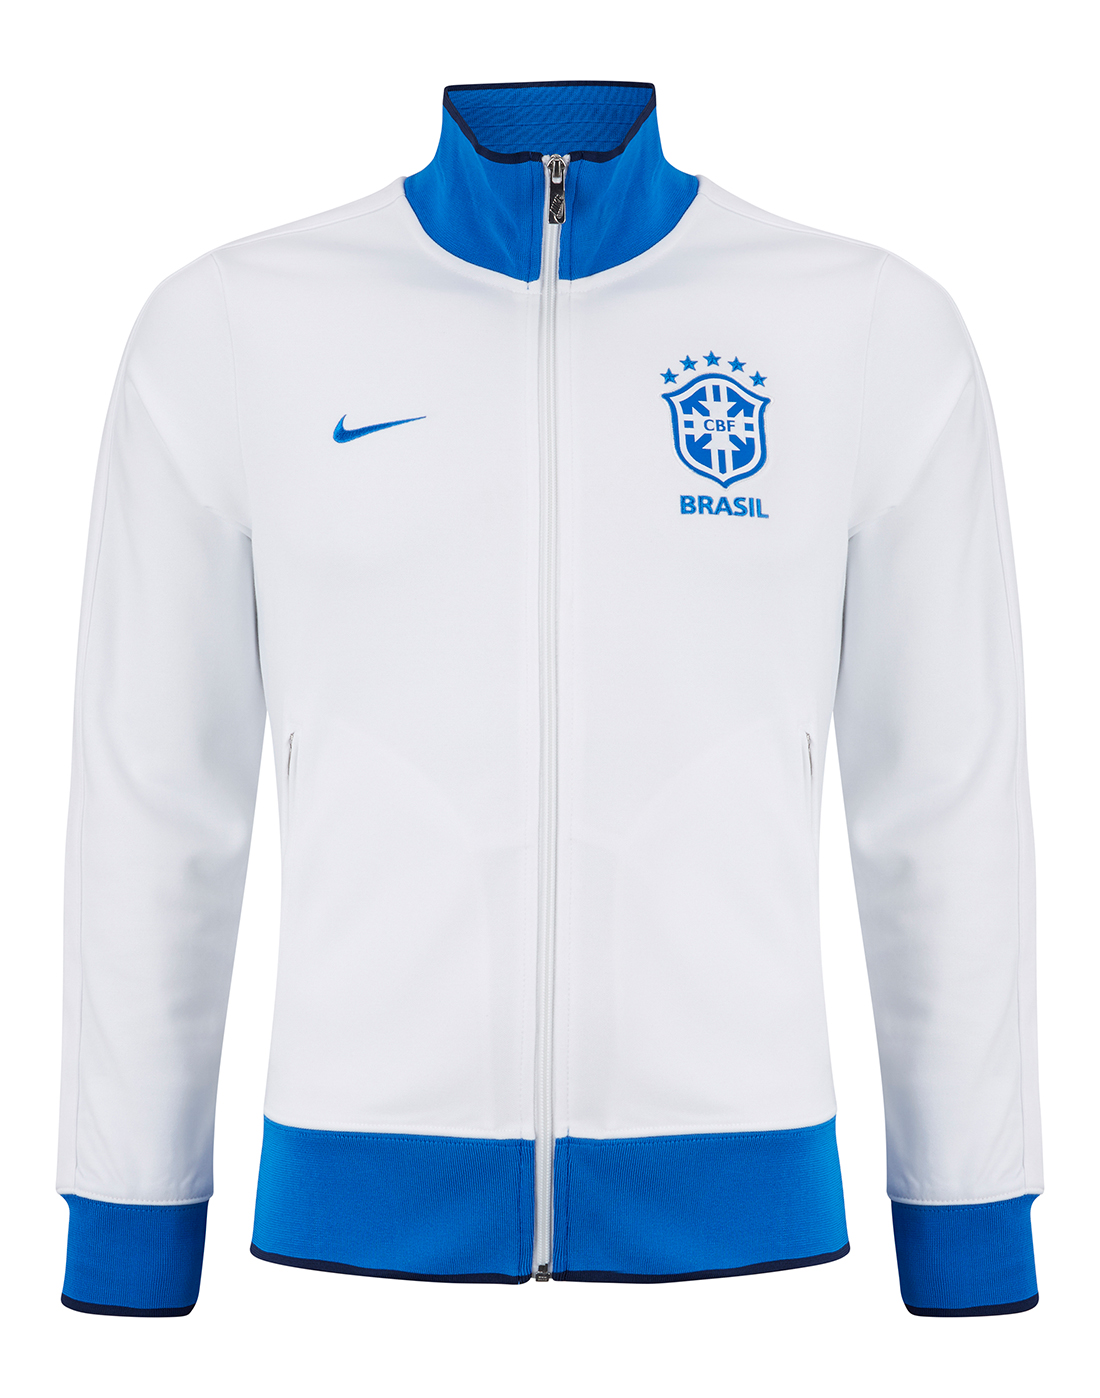 Brazil National Team Nike All-Weather Raglan Jacket - Blue